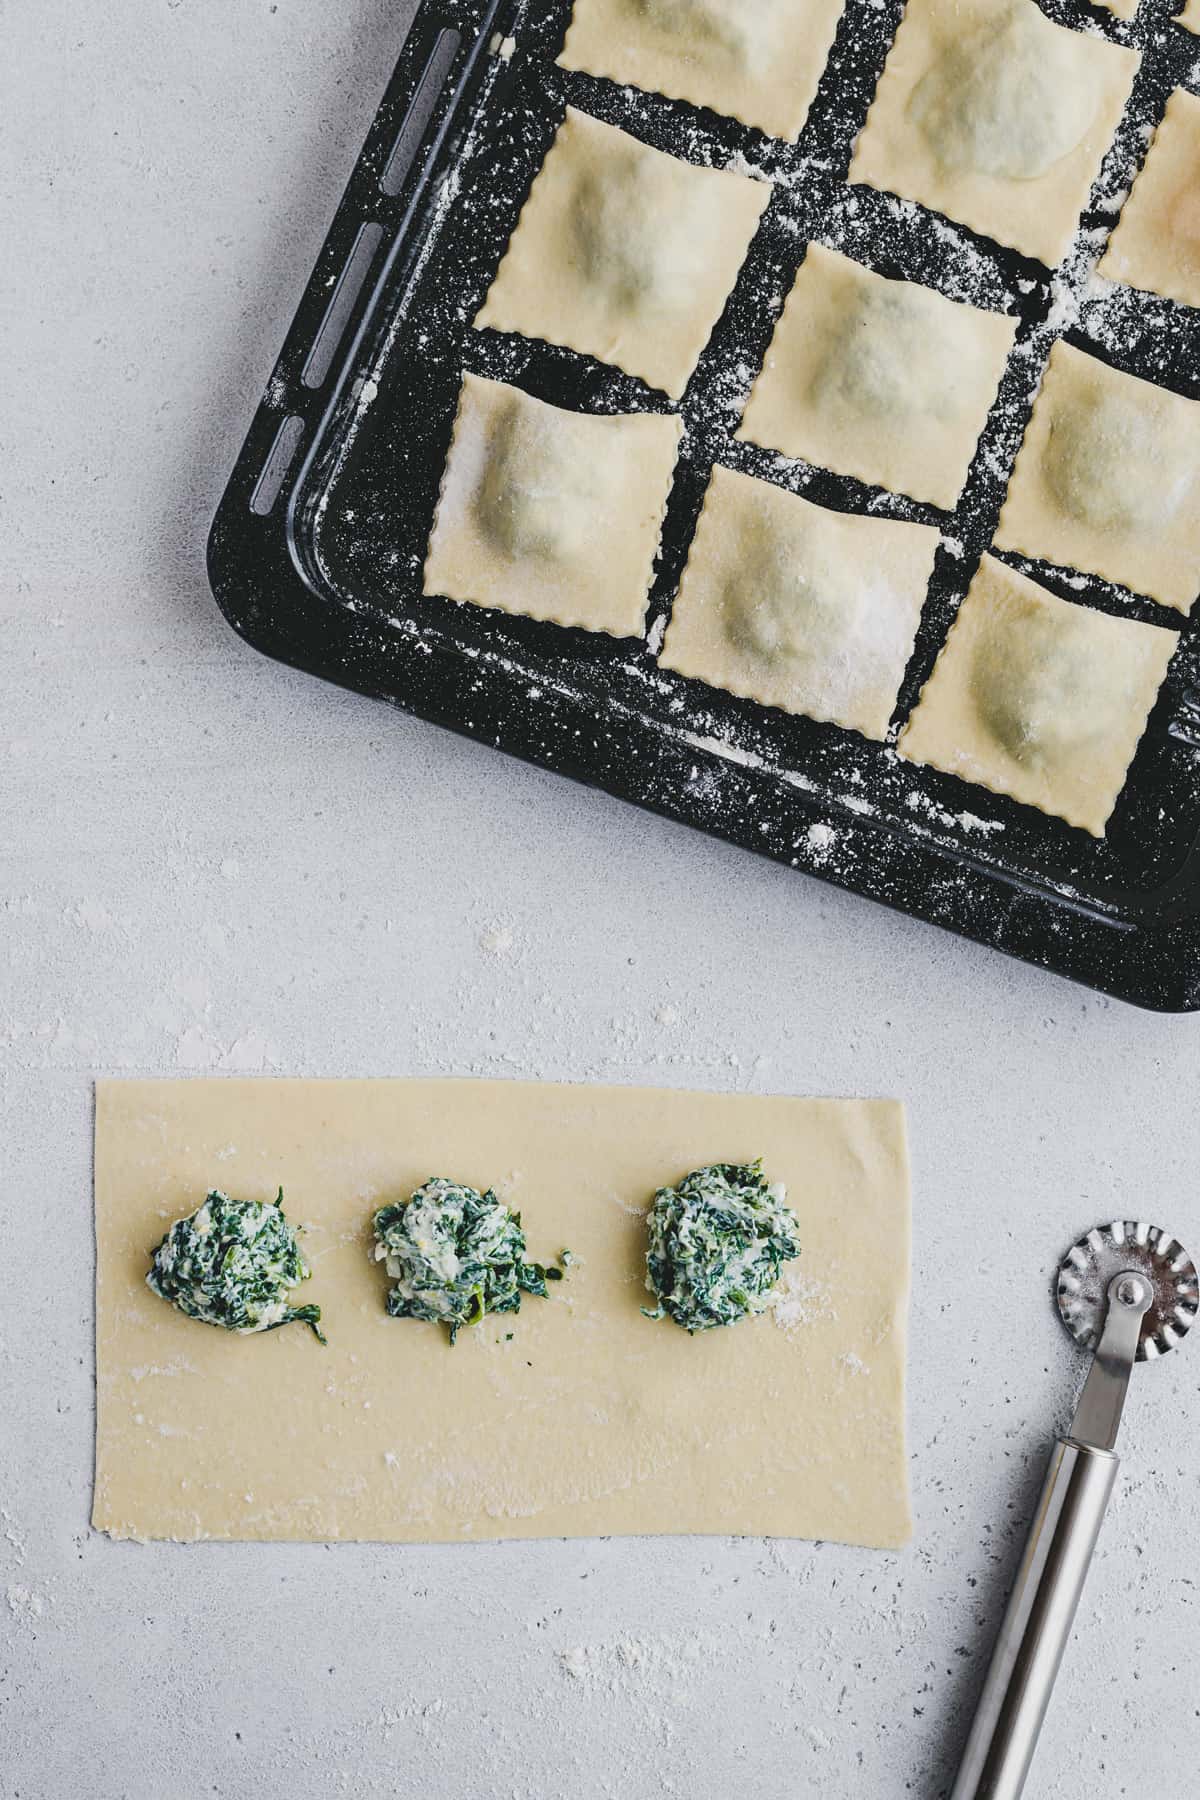 making ravioli with homemade pasta dough